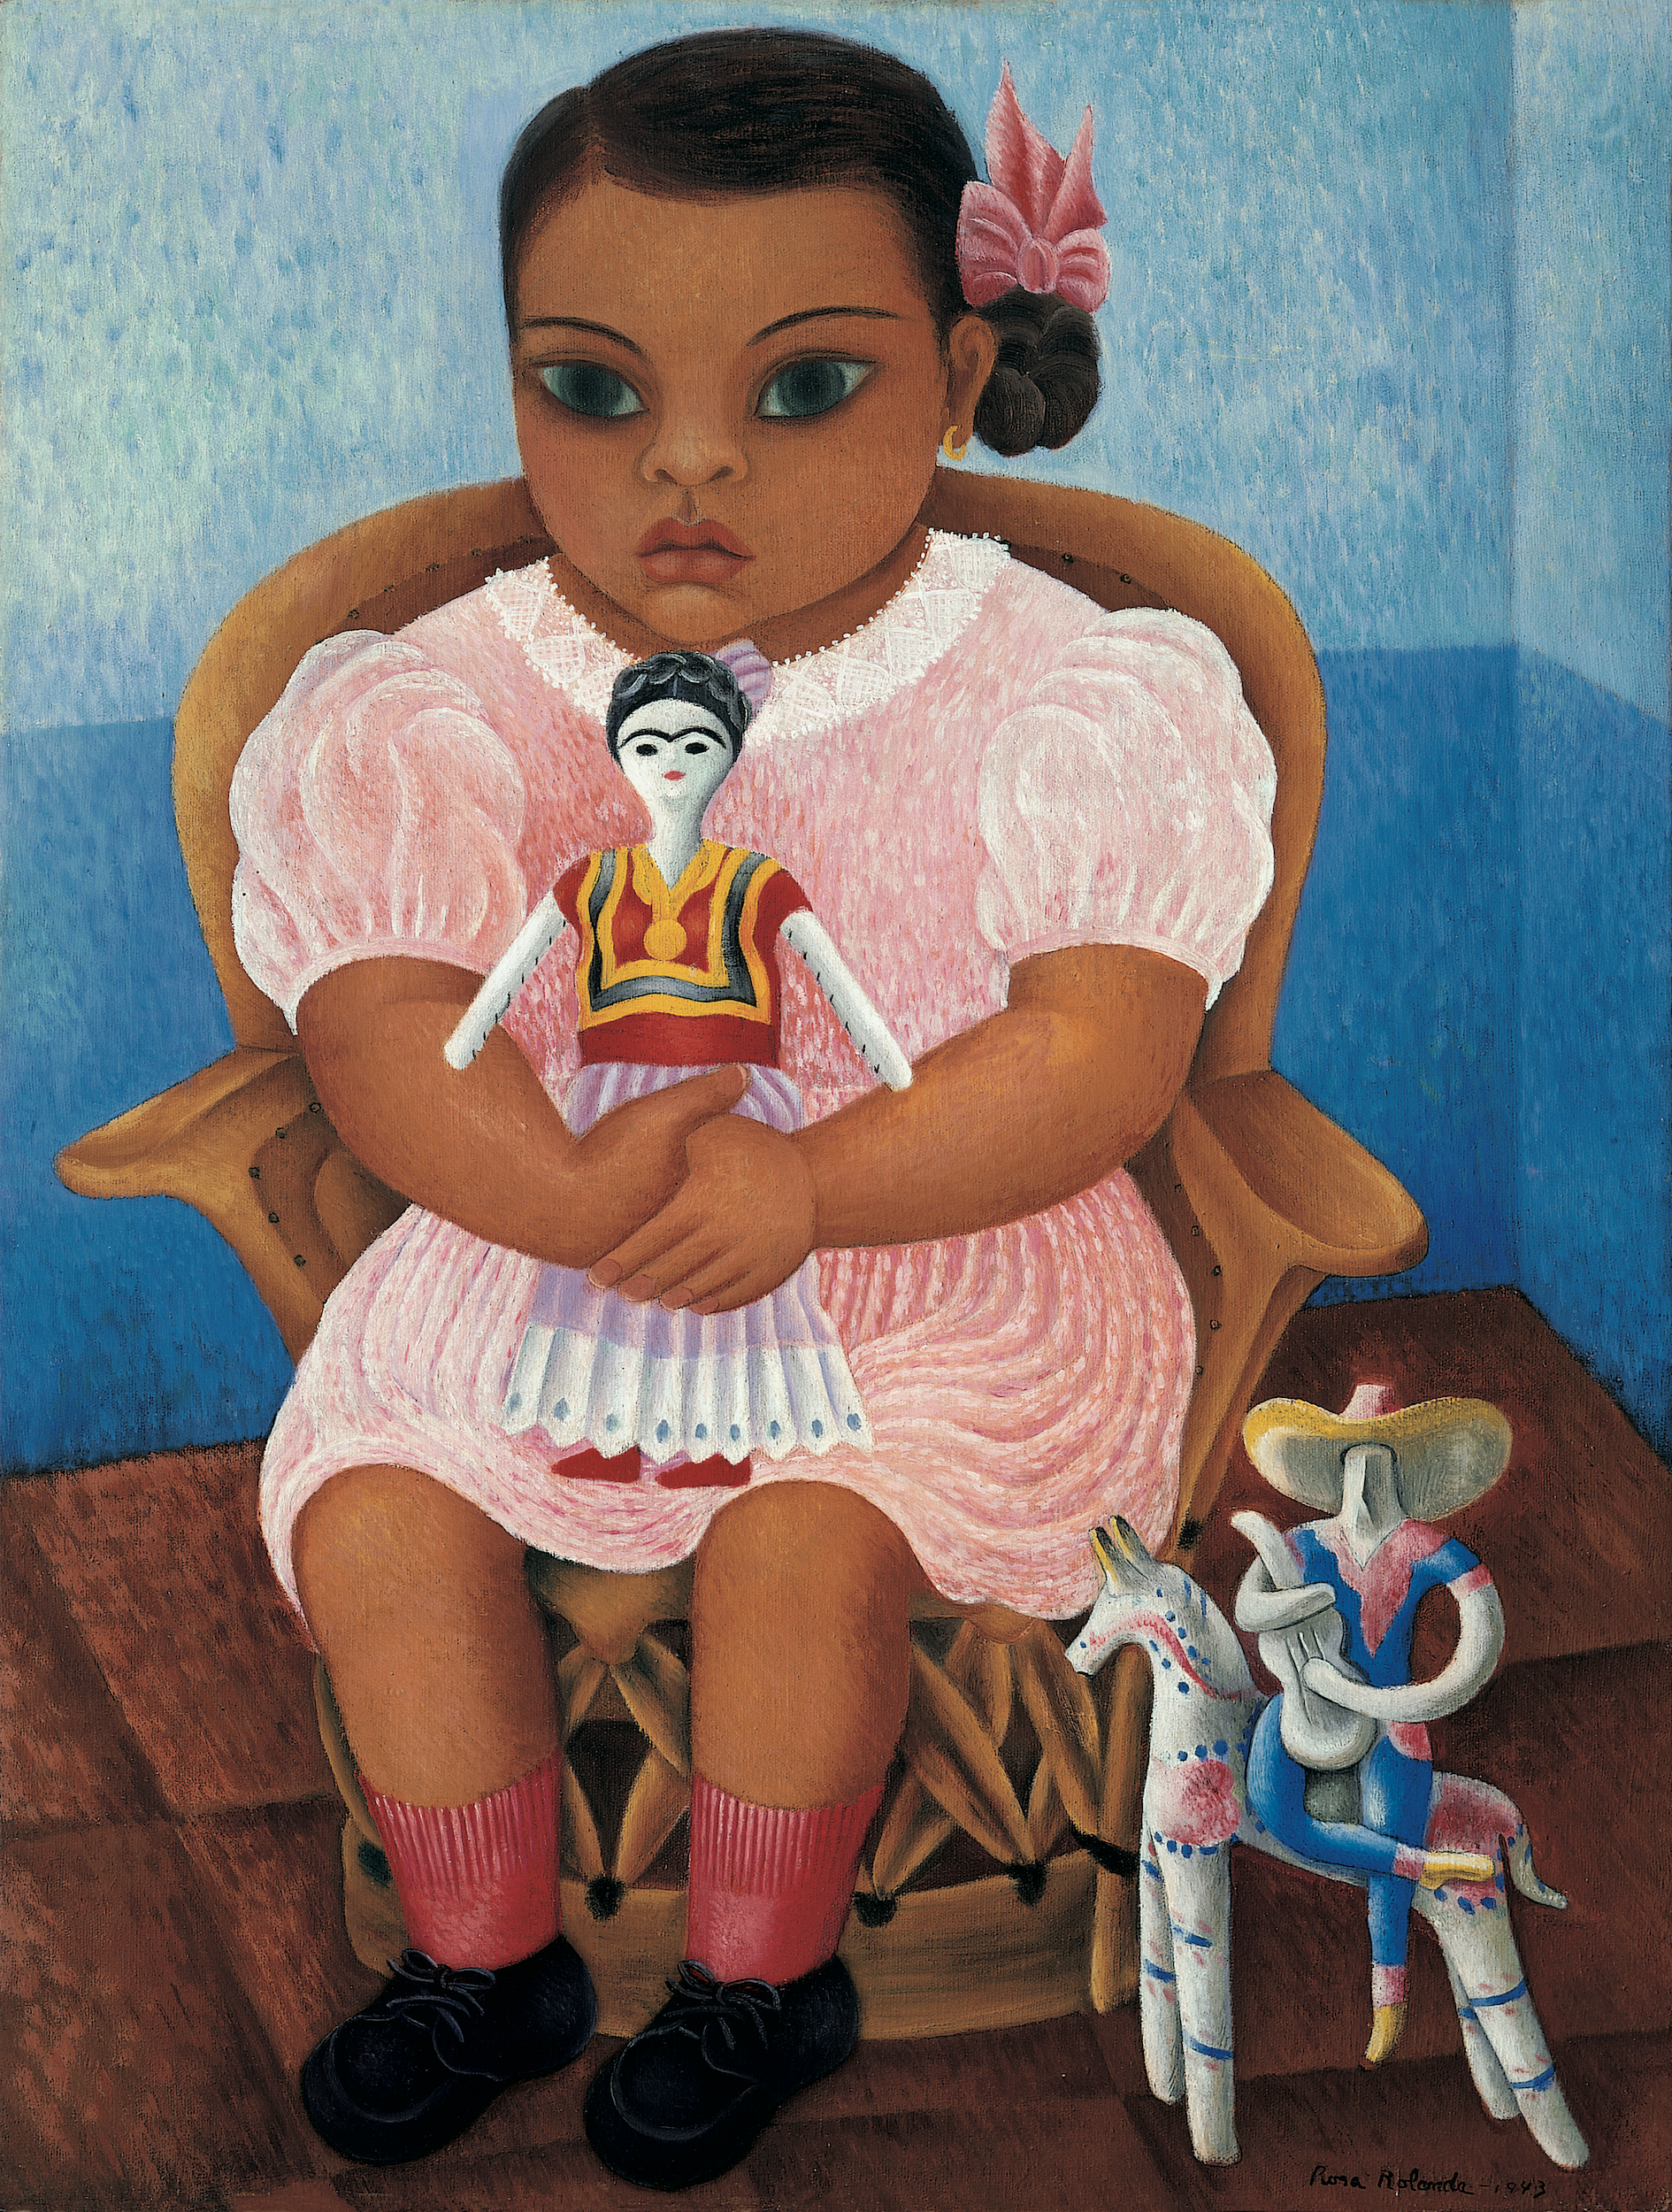 Oyuncak Bebek (orig. "Niña de la Muñeca") by Rosa Rolanda - 1943 - 65 x 50 cm 